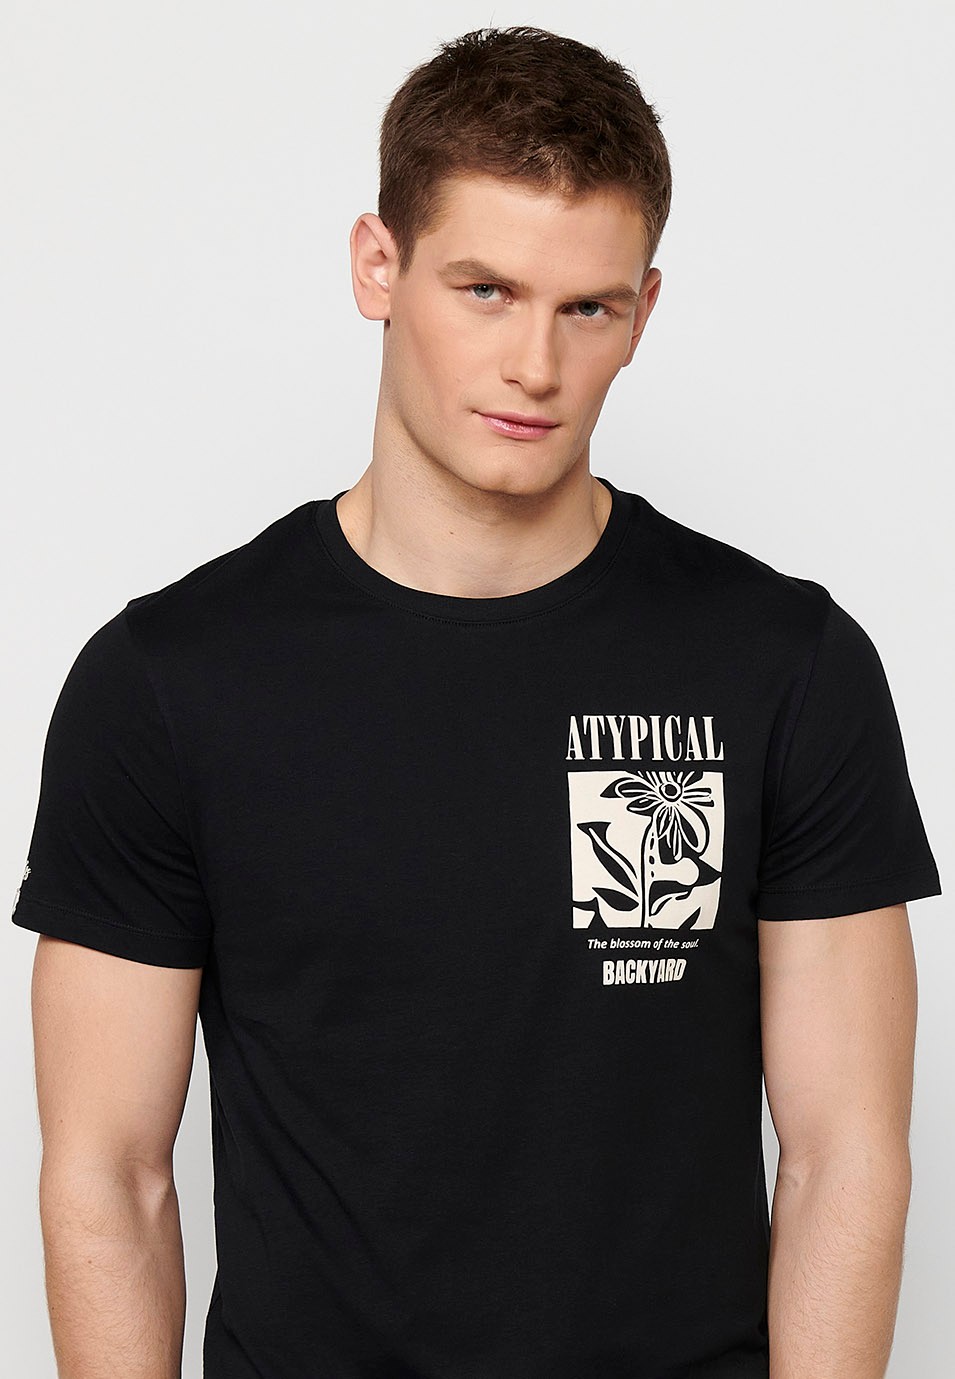 Men's black short-sleeved cotton T-shirt, round neck and back print